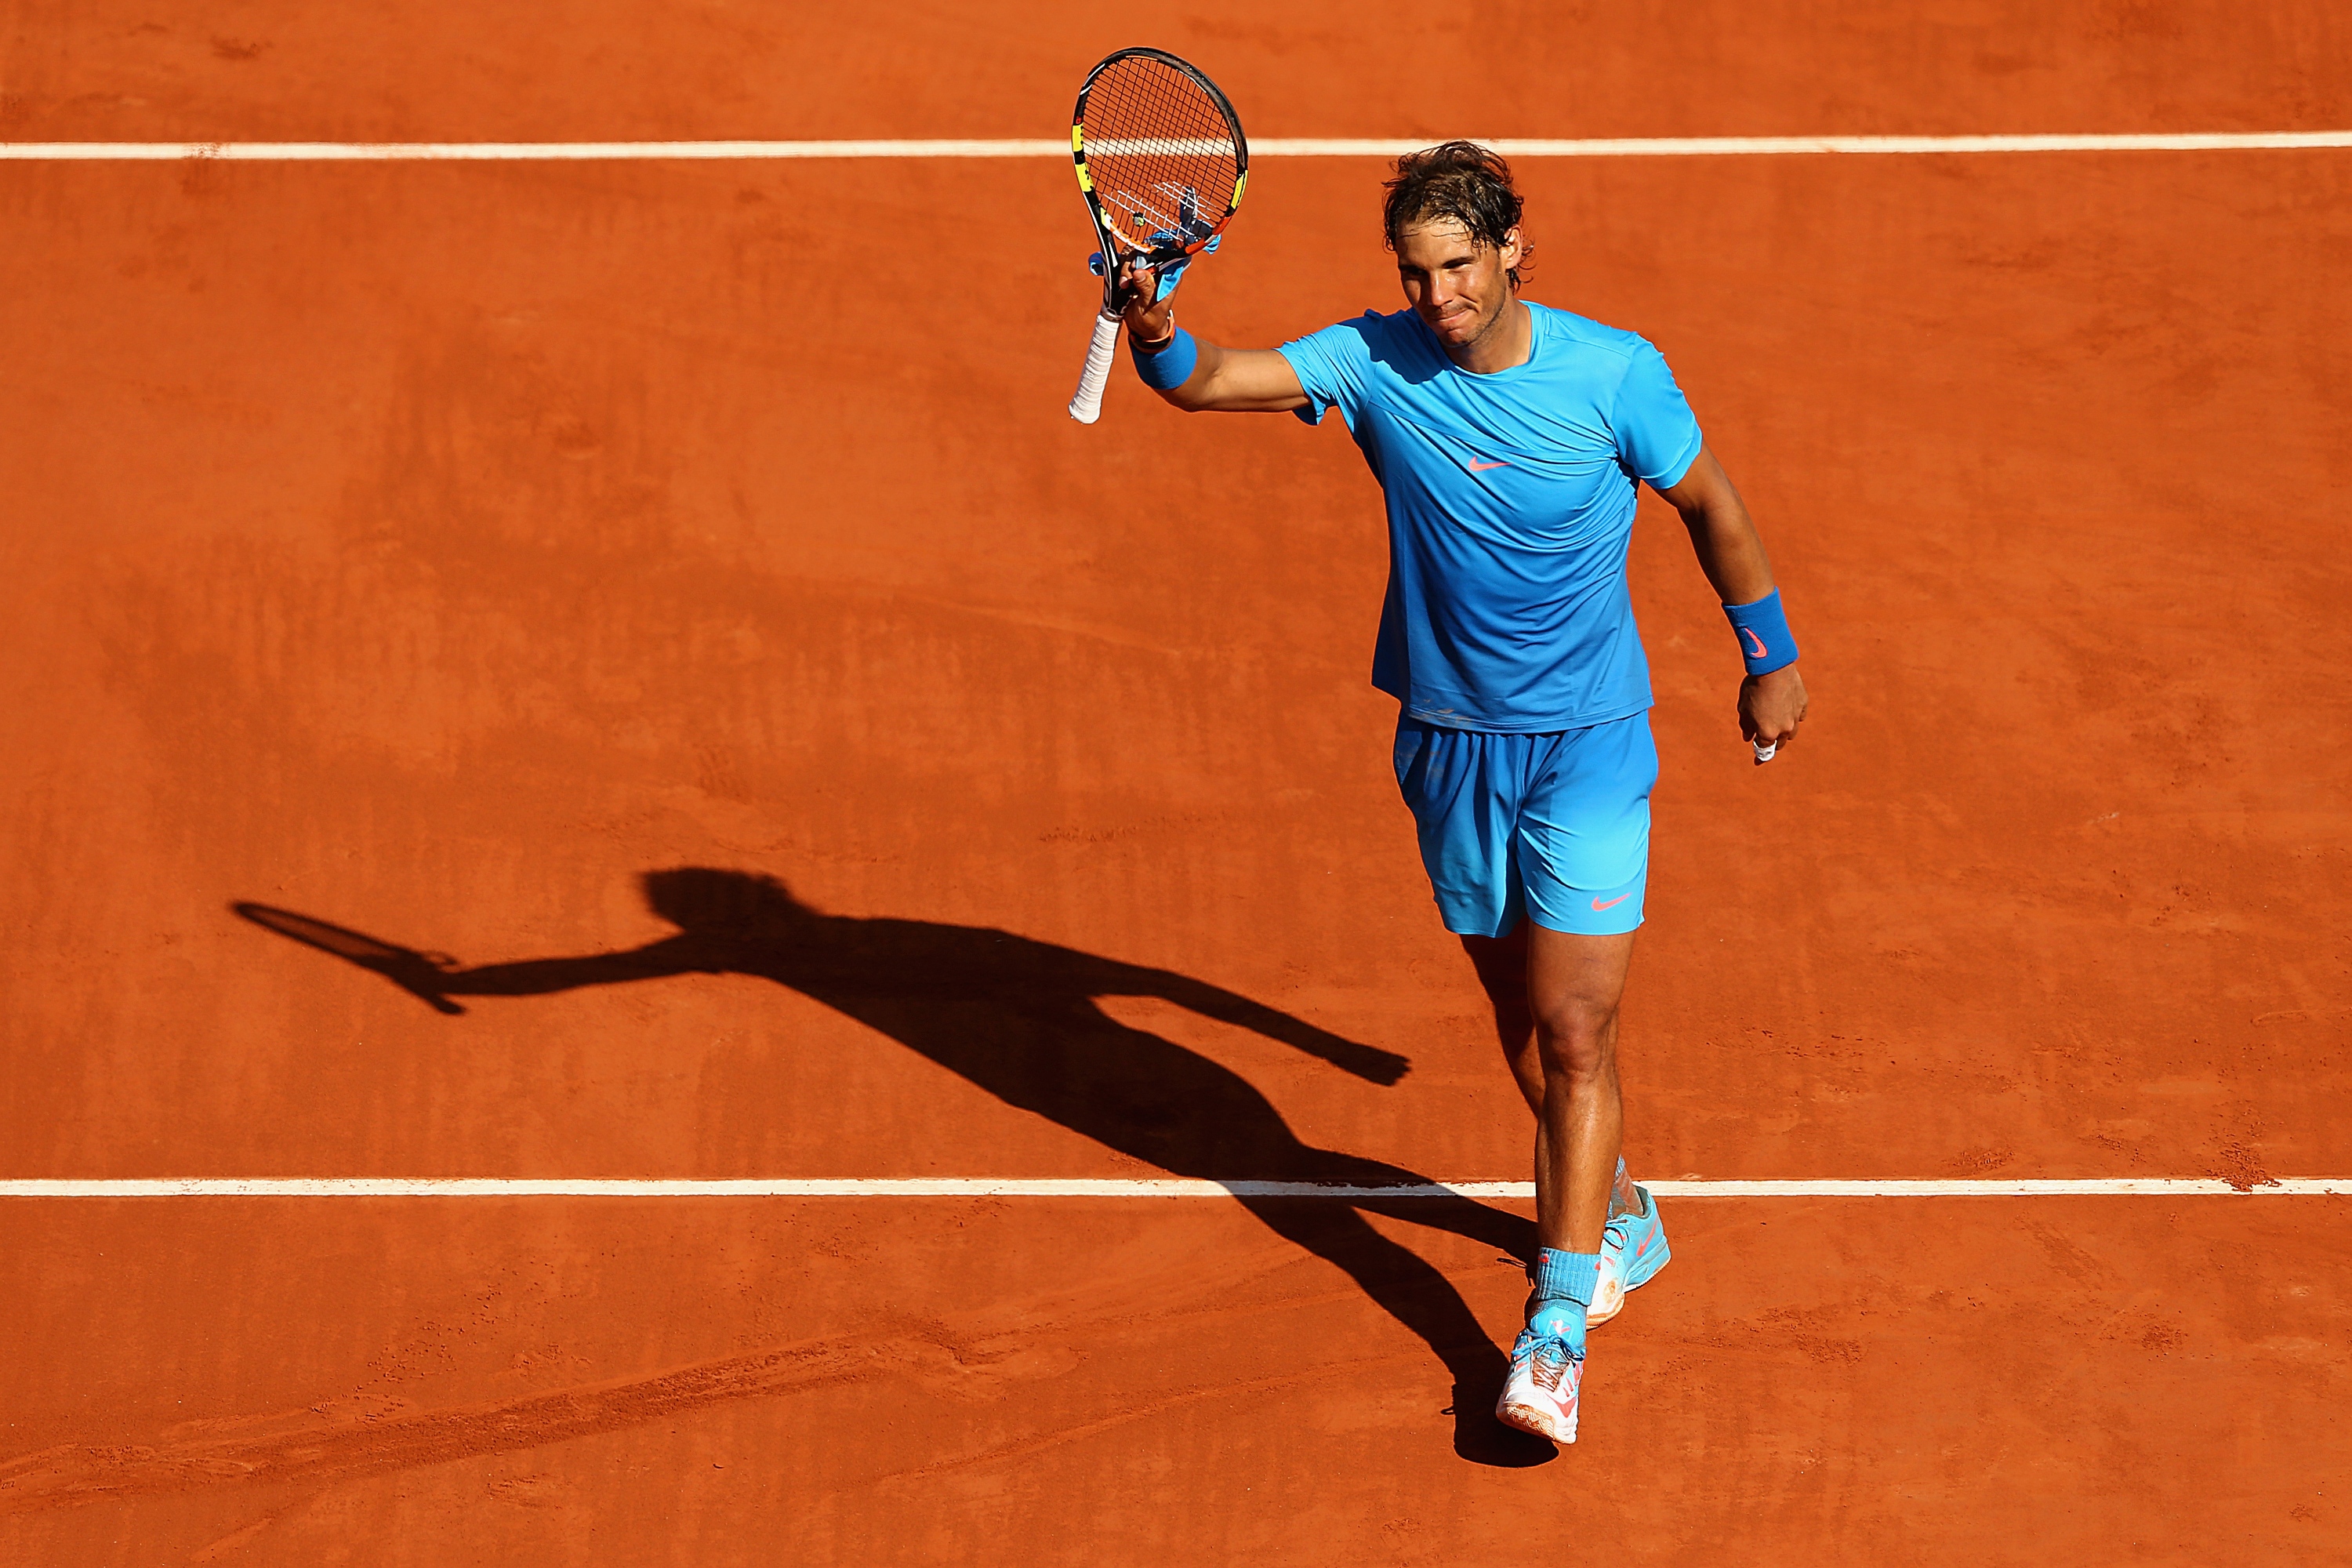 PHOTOS: Rafael Nadal advances to French Open 4th Round – Rafael Nadal Fans